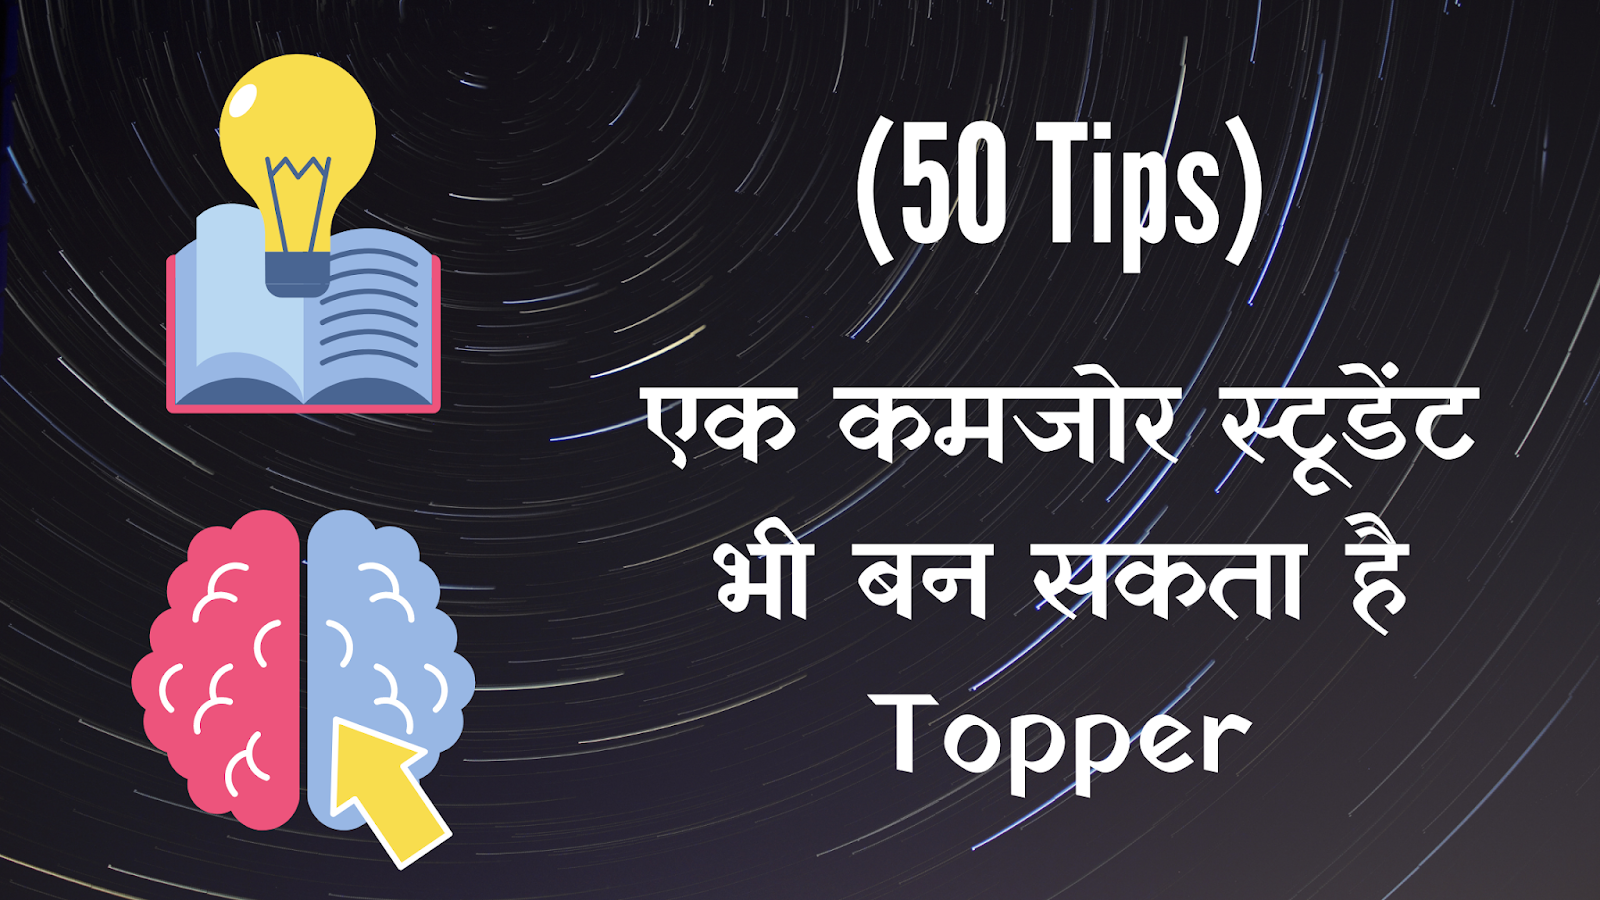 padhai kaise kare, 50 study tips in hindi